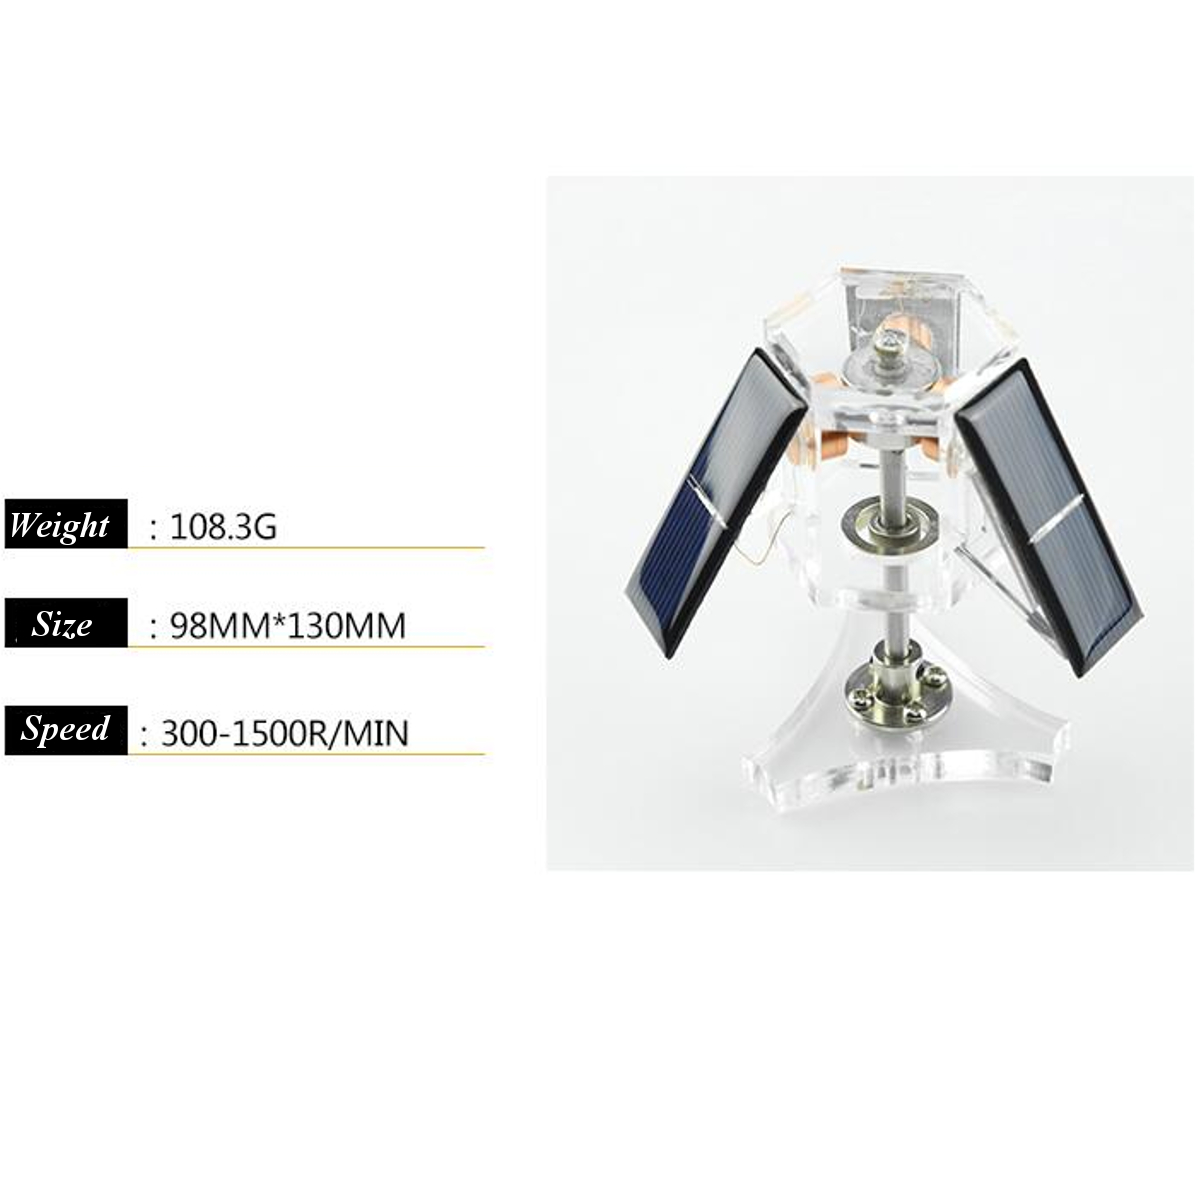 STARK-6-Solar-Magnetic-Levitation-Mendocino-Motor-Education-Model-Steam-Stirling-Engine-1290010-9